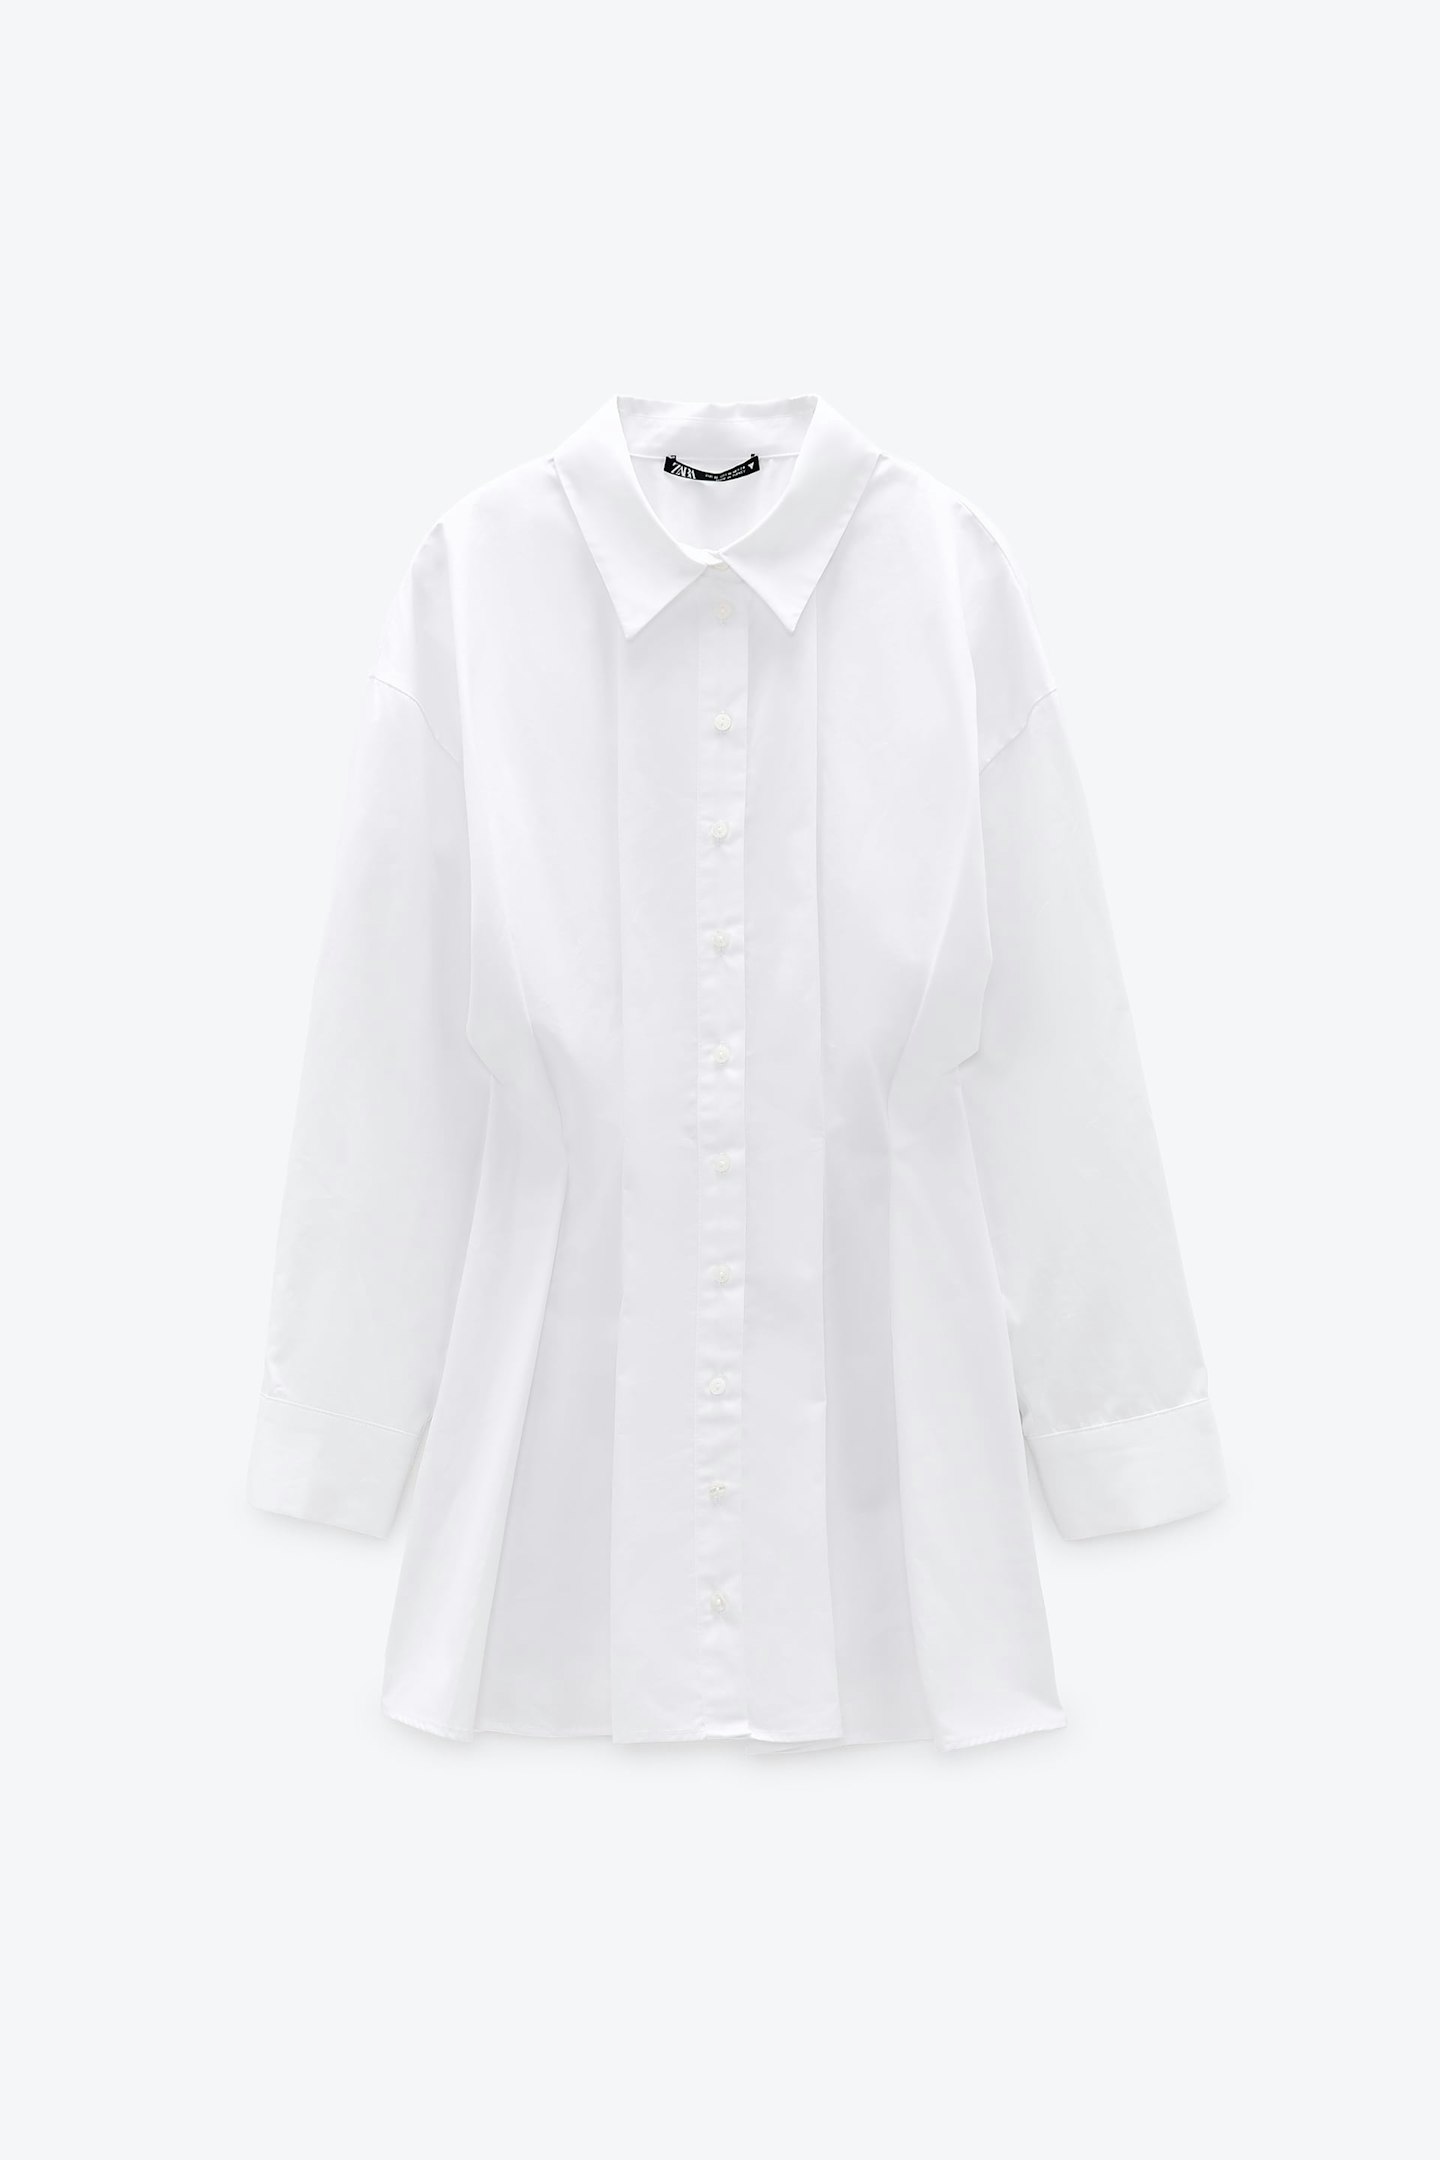 Zara, Shirt Dress With Darts, £29.99